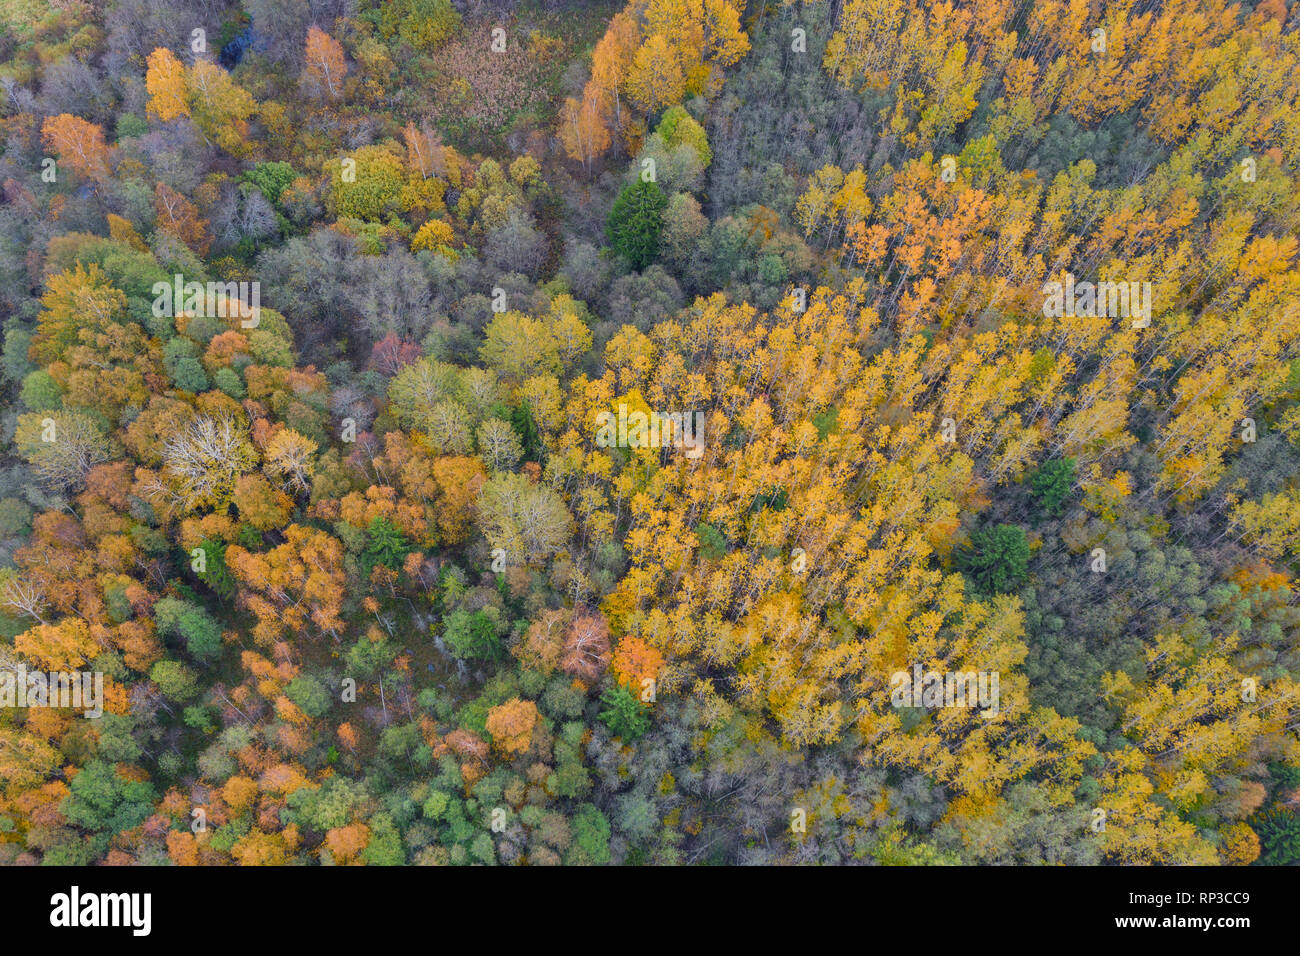 Vista aérea de colorido bosque boreal, otoño. Foto de stock